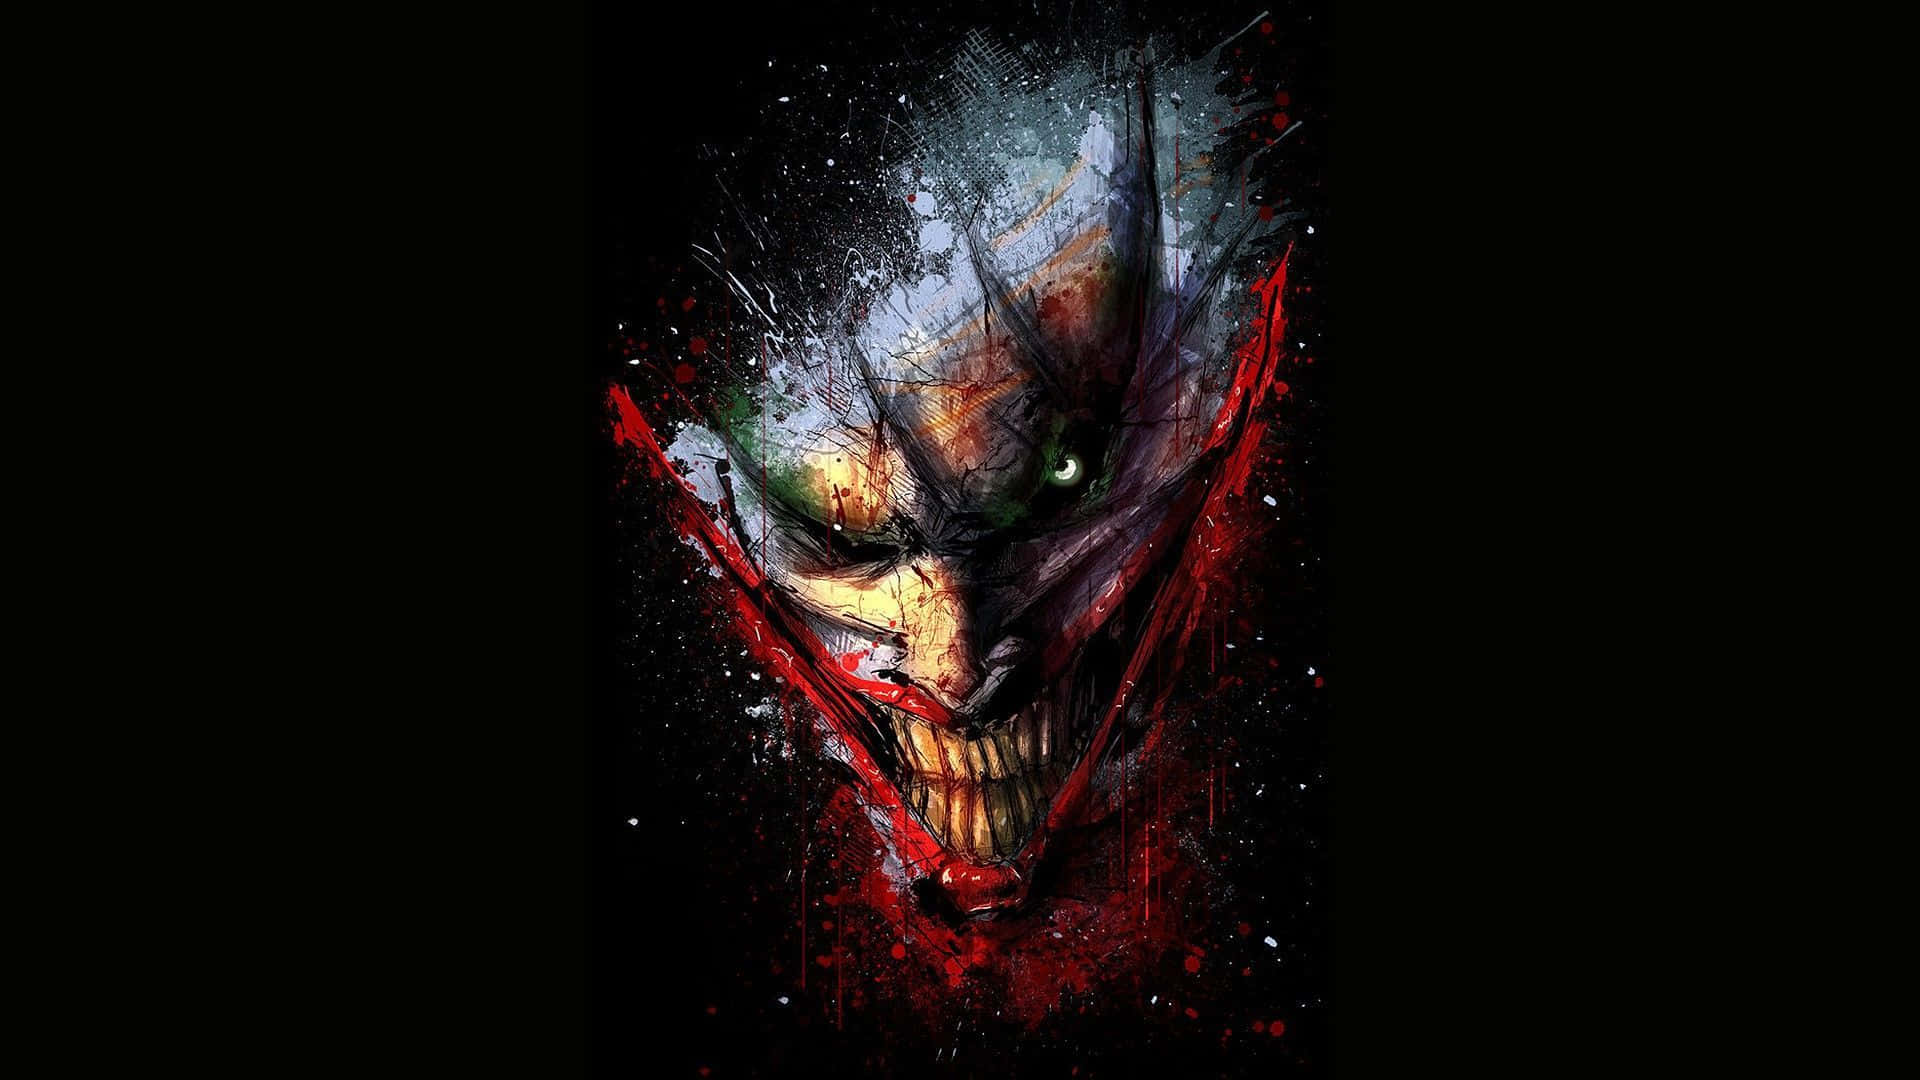 Enigmatic Joker Art in Vibrant Colors Wallpaper